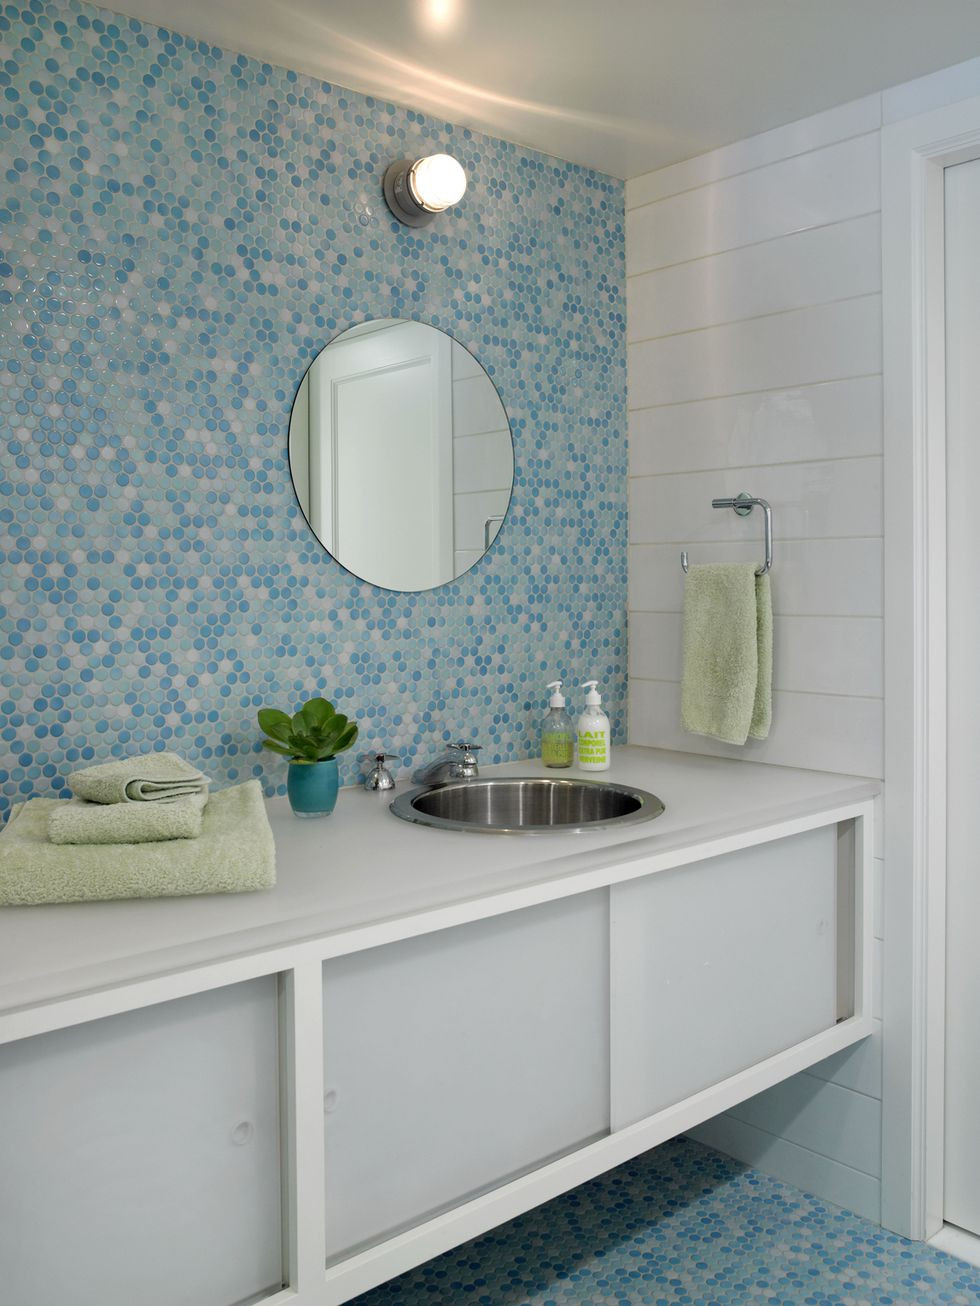 Bathroom Tile Design
 10 Beautiful Tile Ideas For A Bold Bathroom Interior